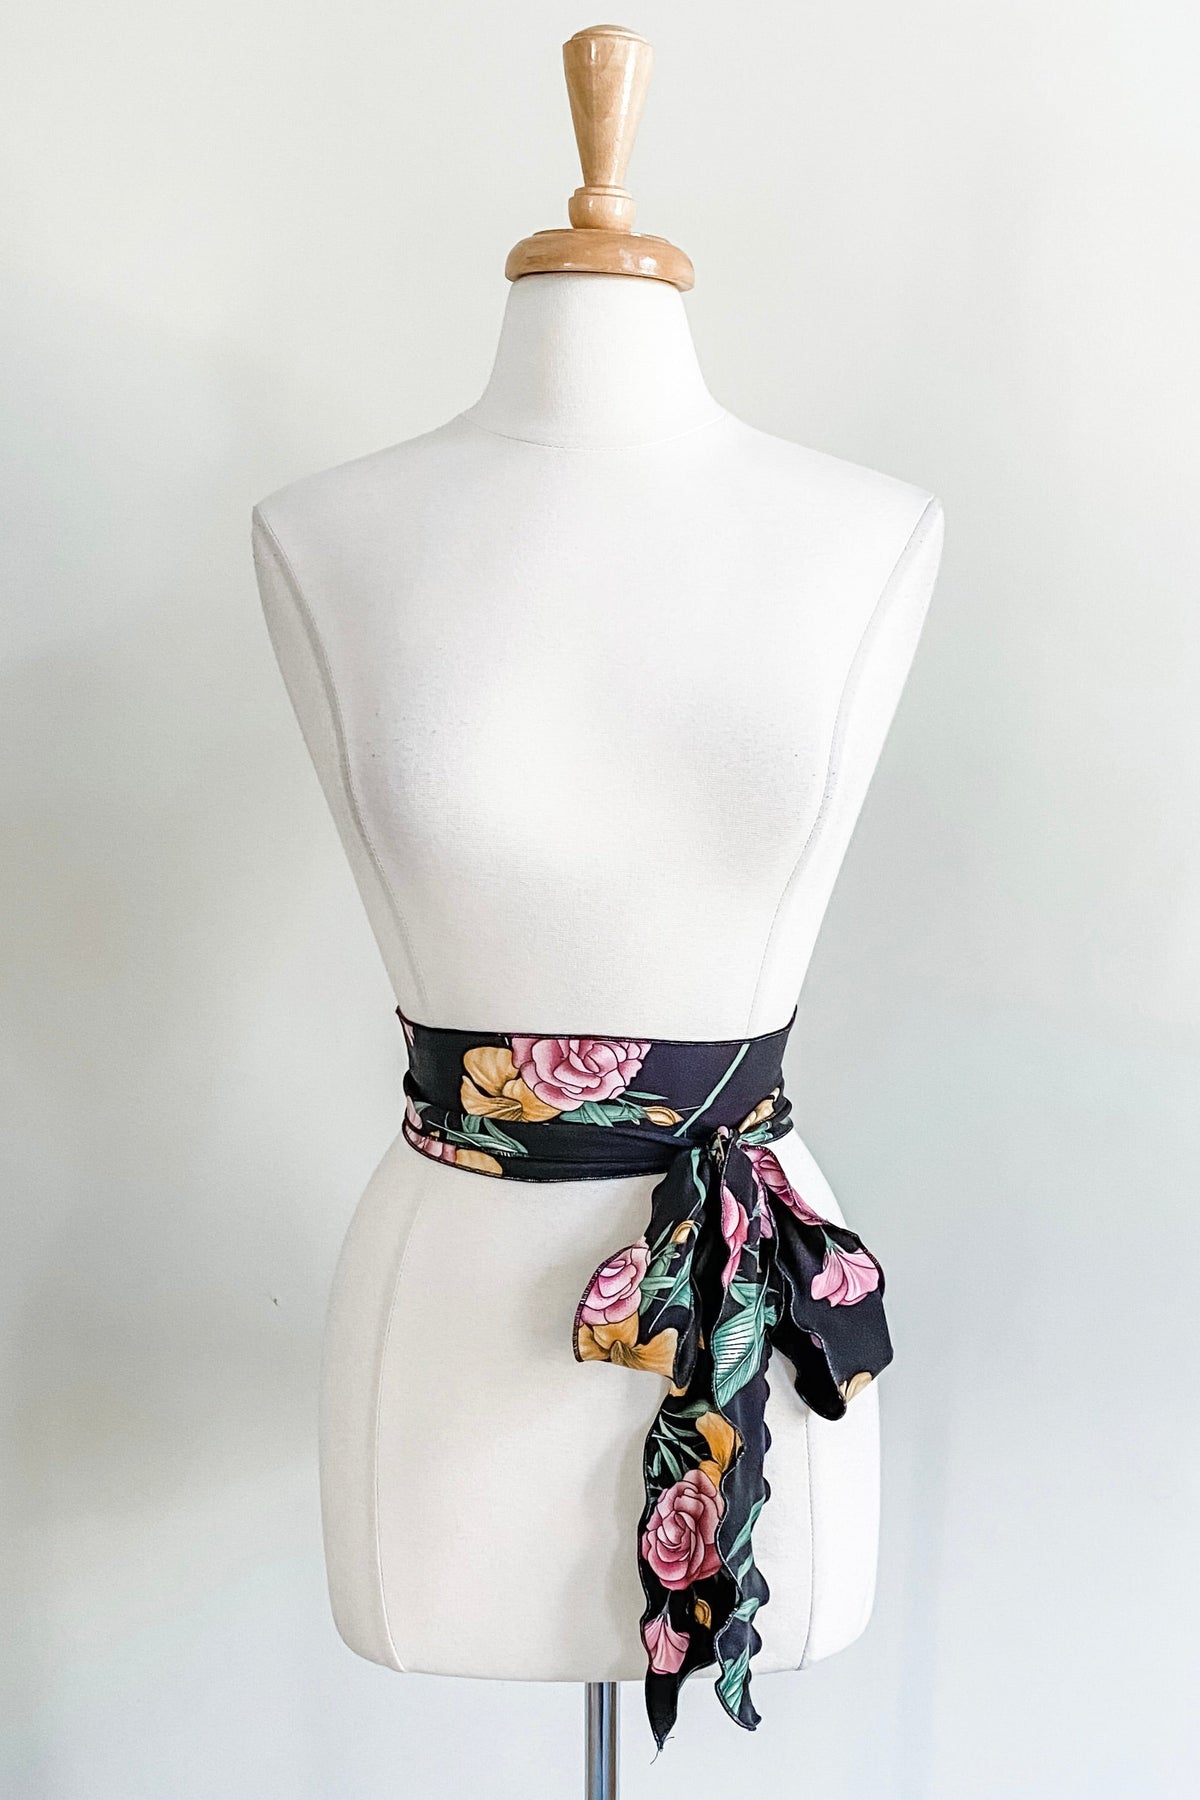 Diane Kroe Sash Belt (Tropical Flowers) - The Classic Capsule Collection